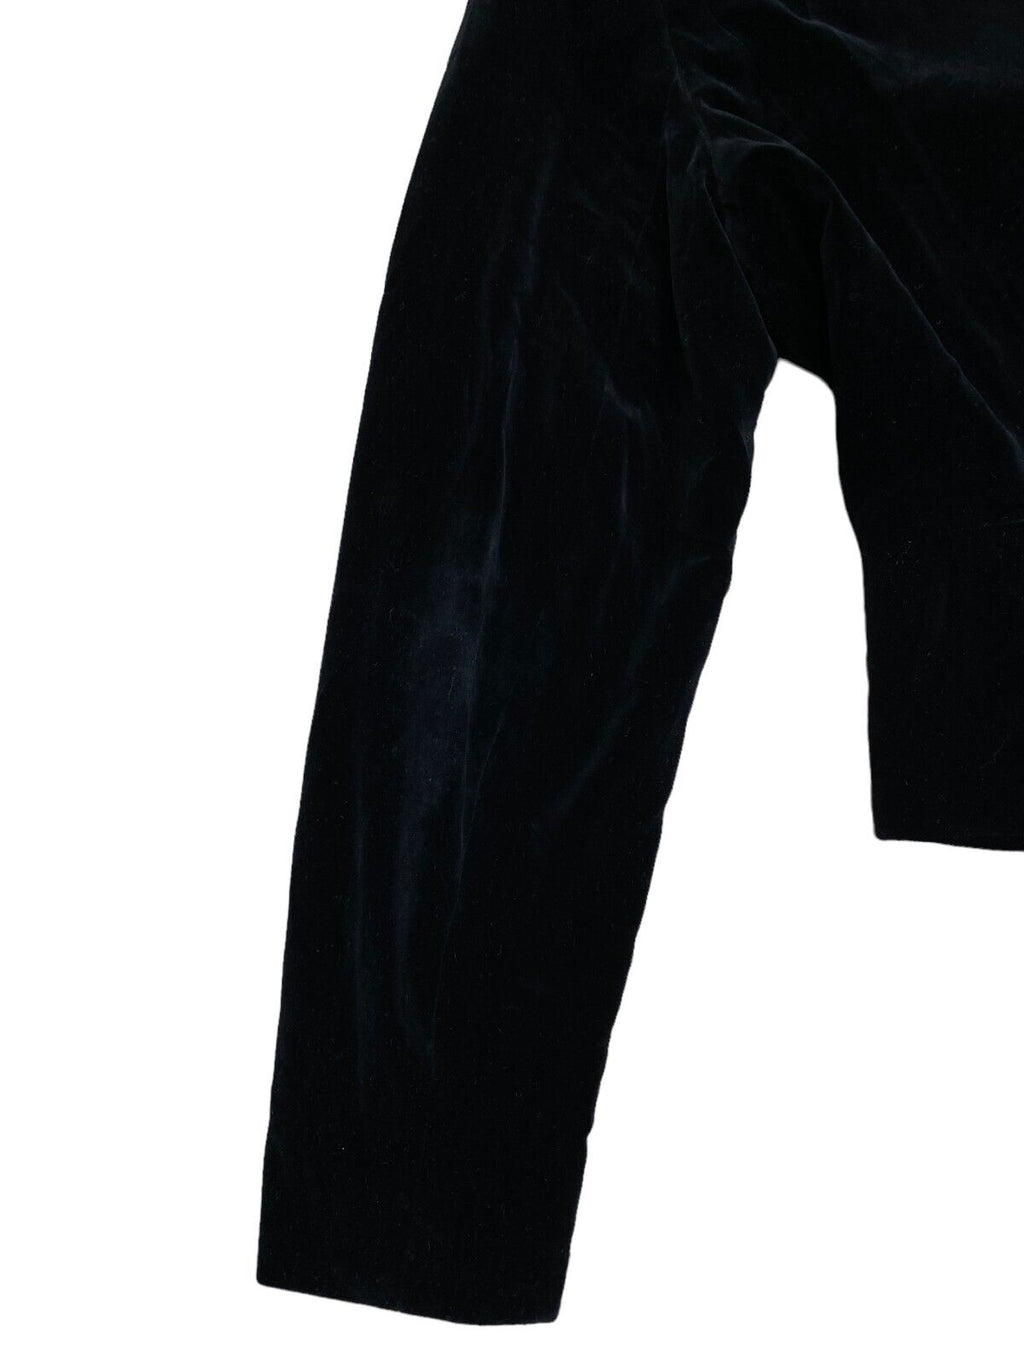 Black Velvet Corduroy Blazer Jacket  Size 42 fits L